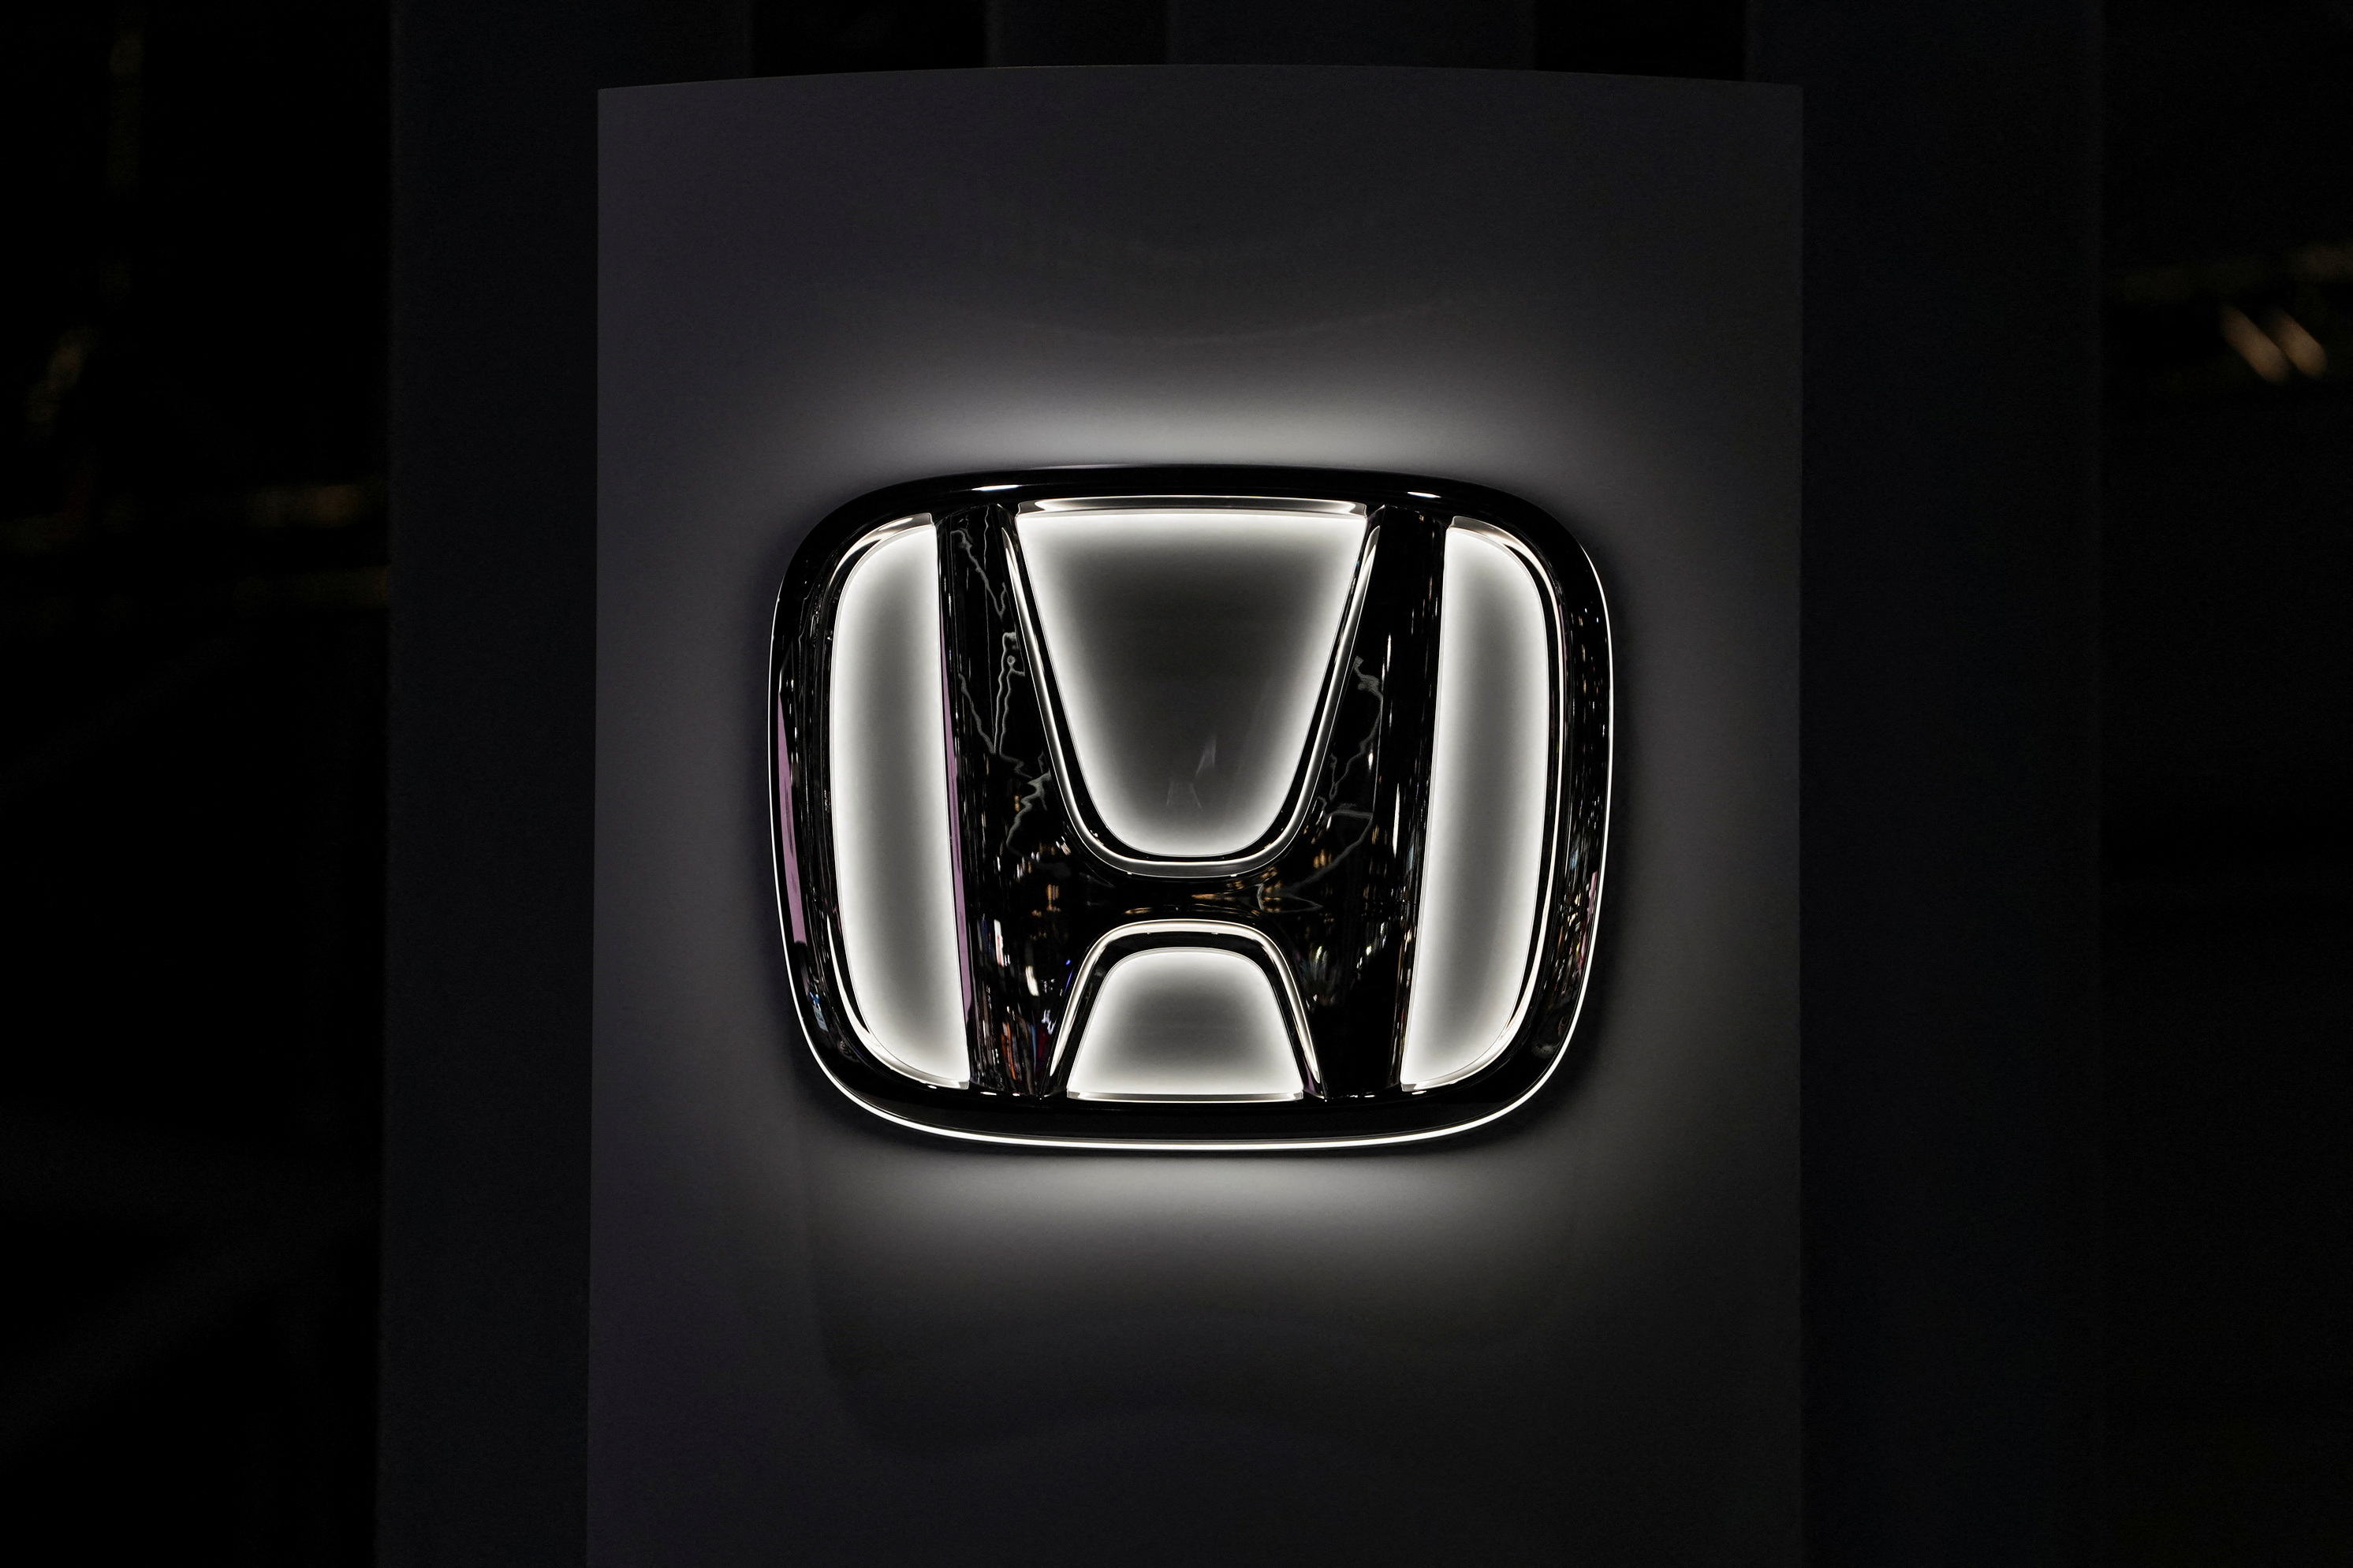 Honda recalling 1.3 million vehicles worldwide for rear camera